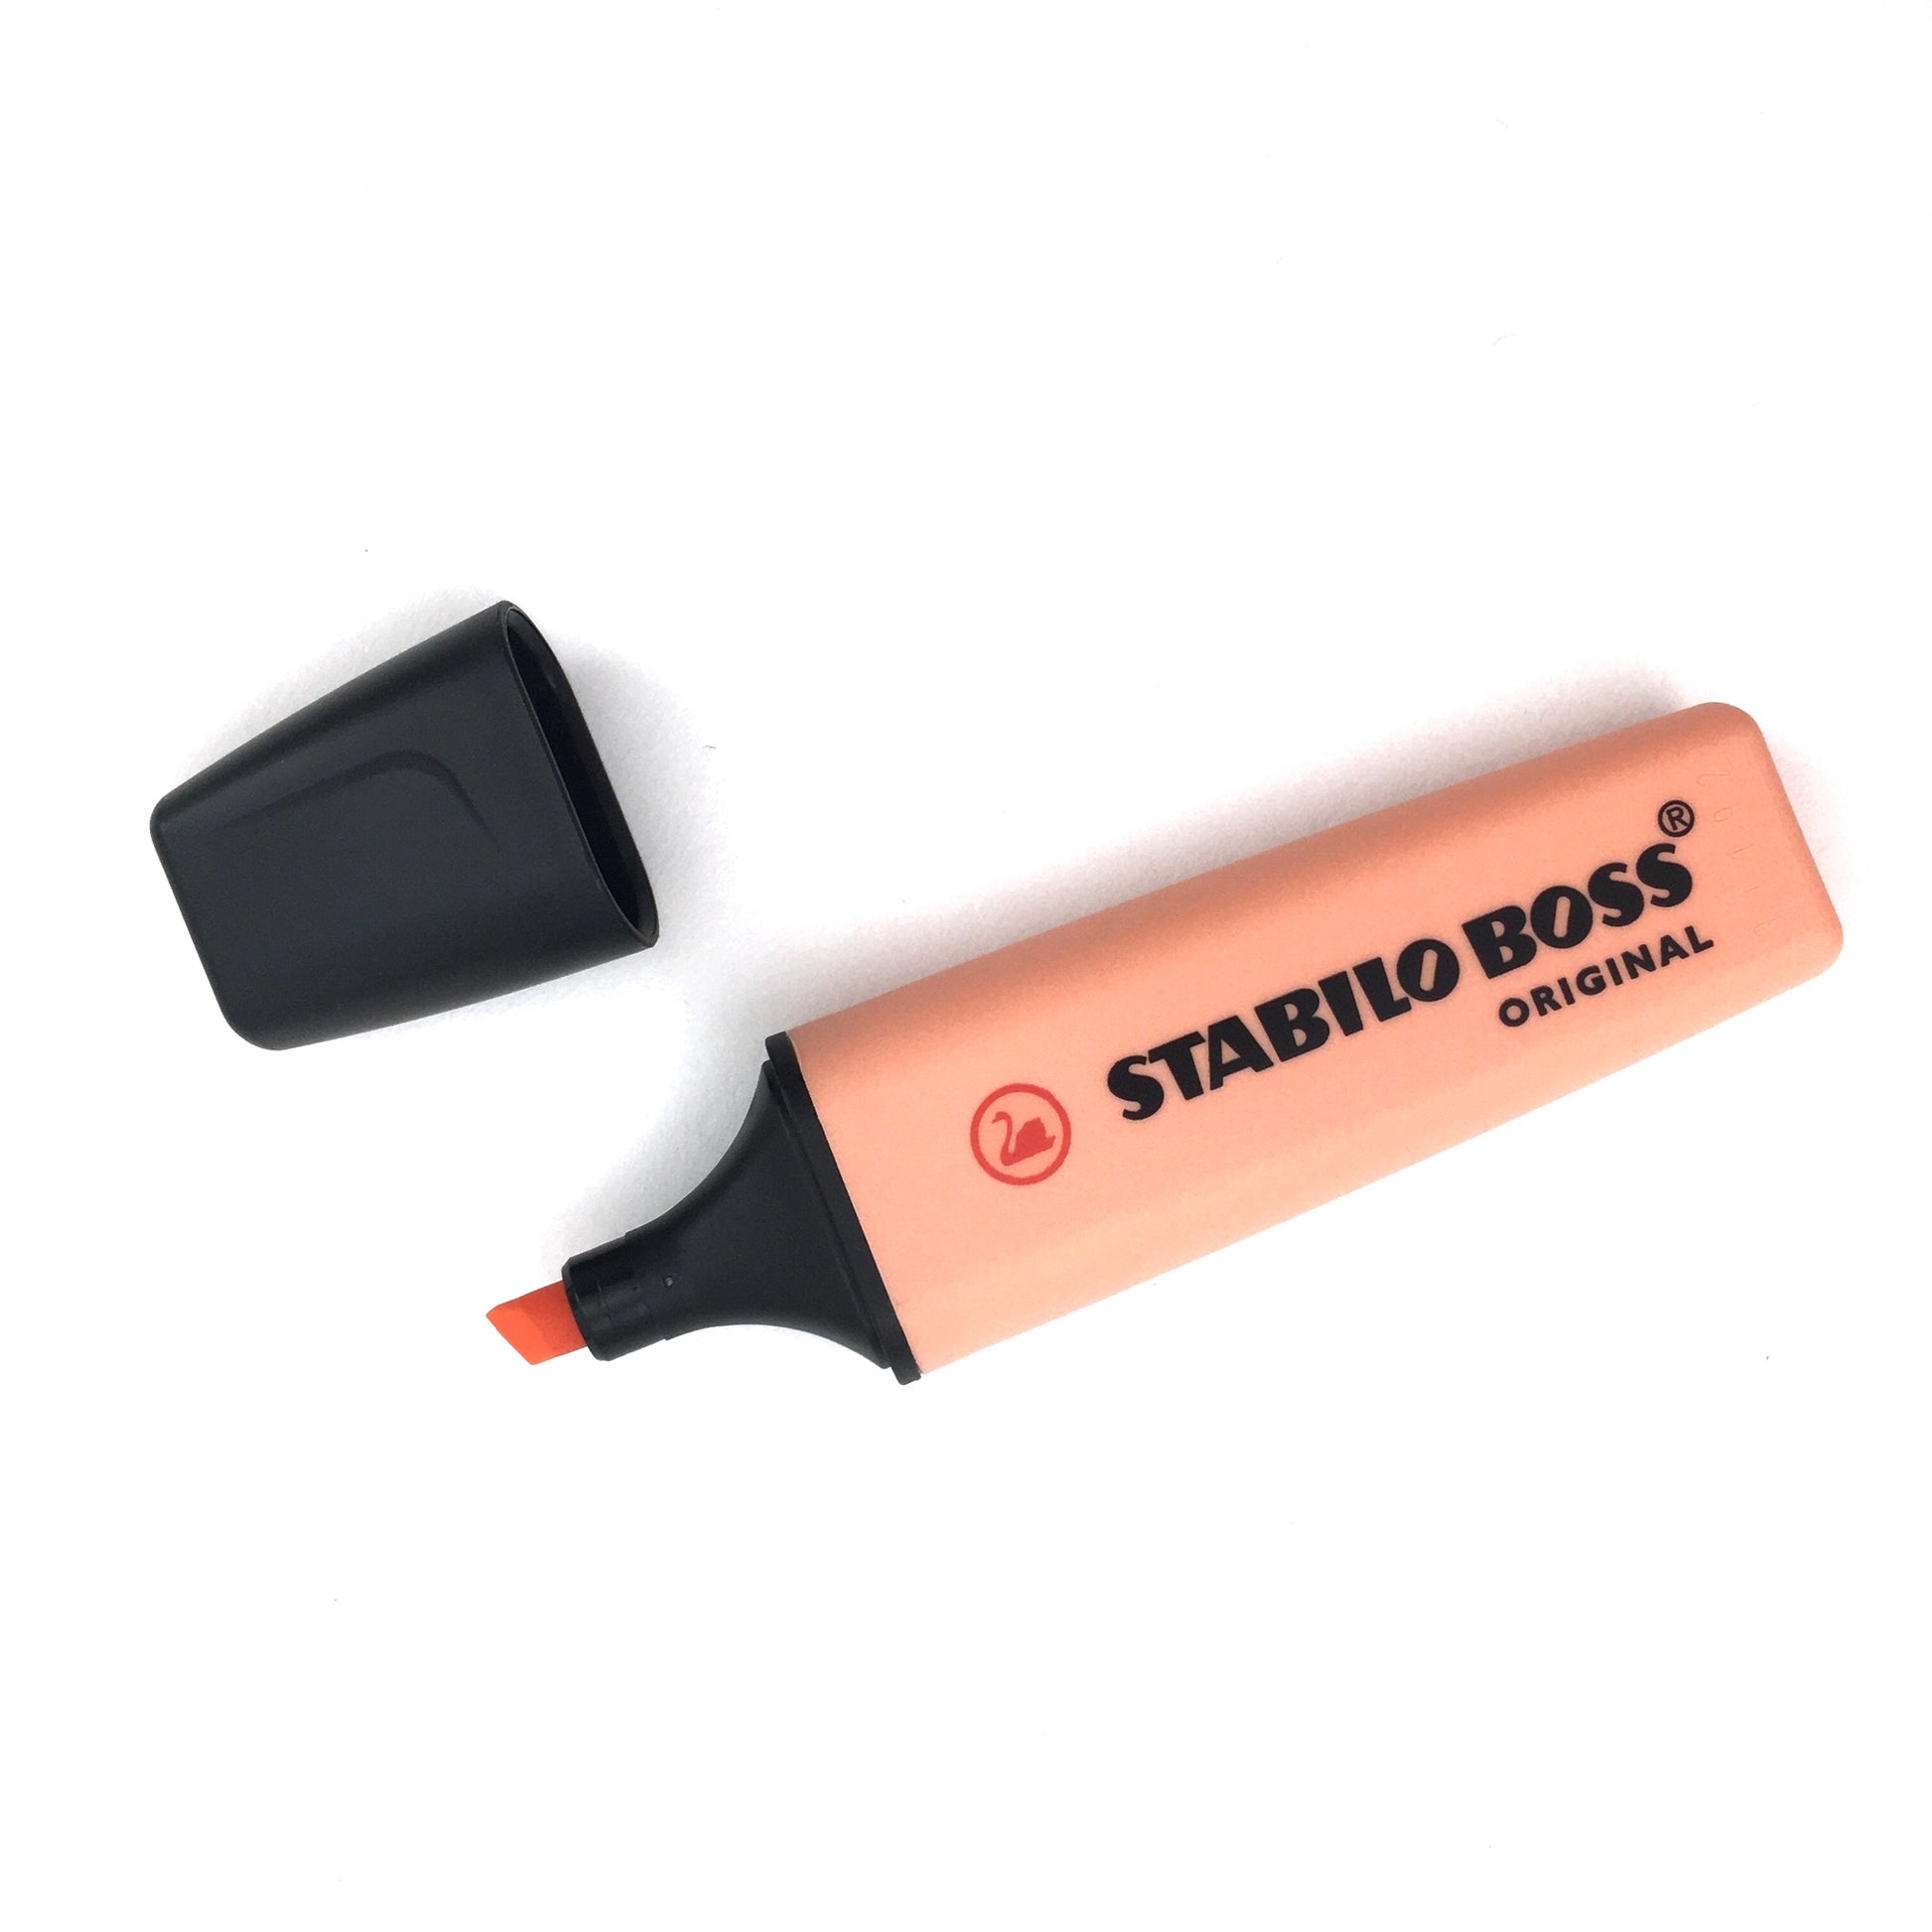 Stabilo BOSS Pastel Highlighters - Creamy Peach by Stabilo - K. A. Artist Shop